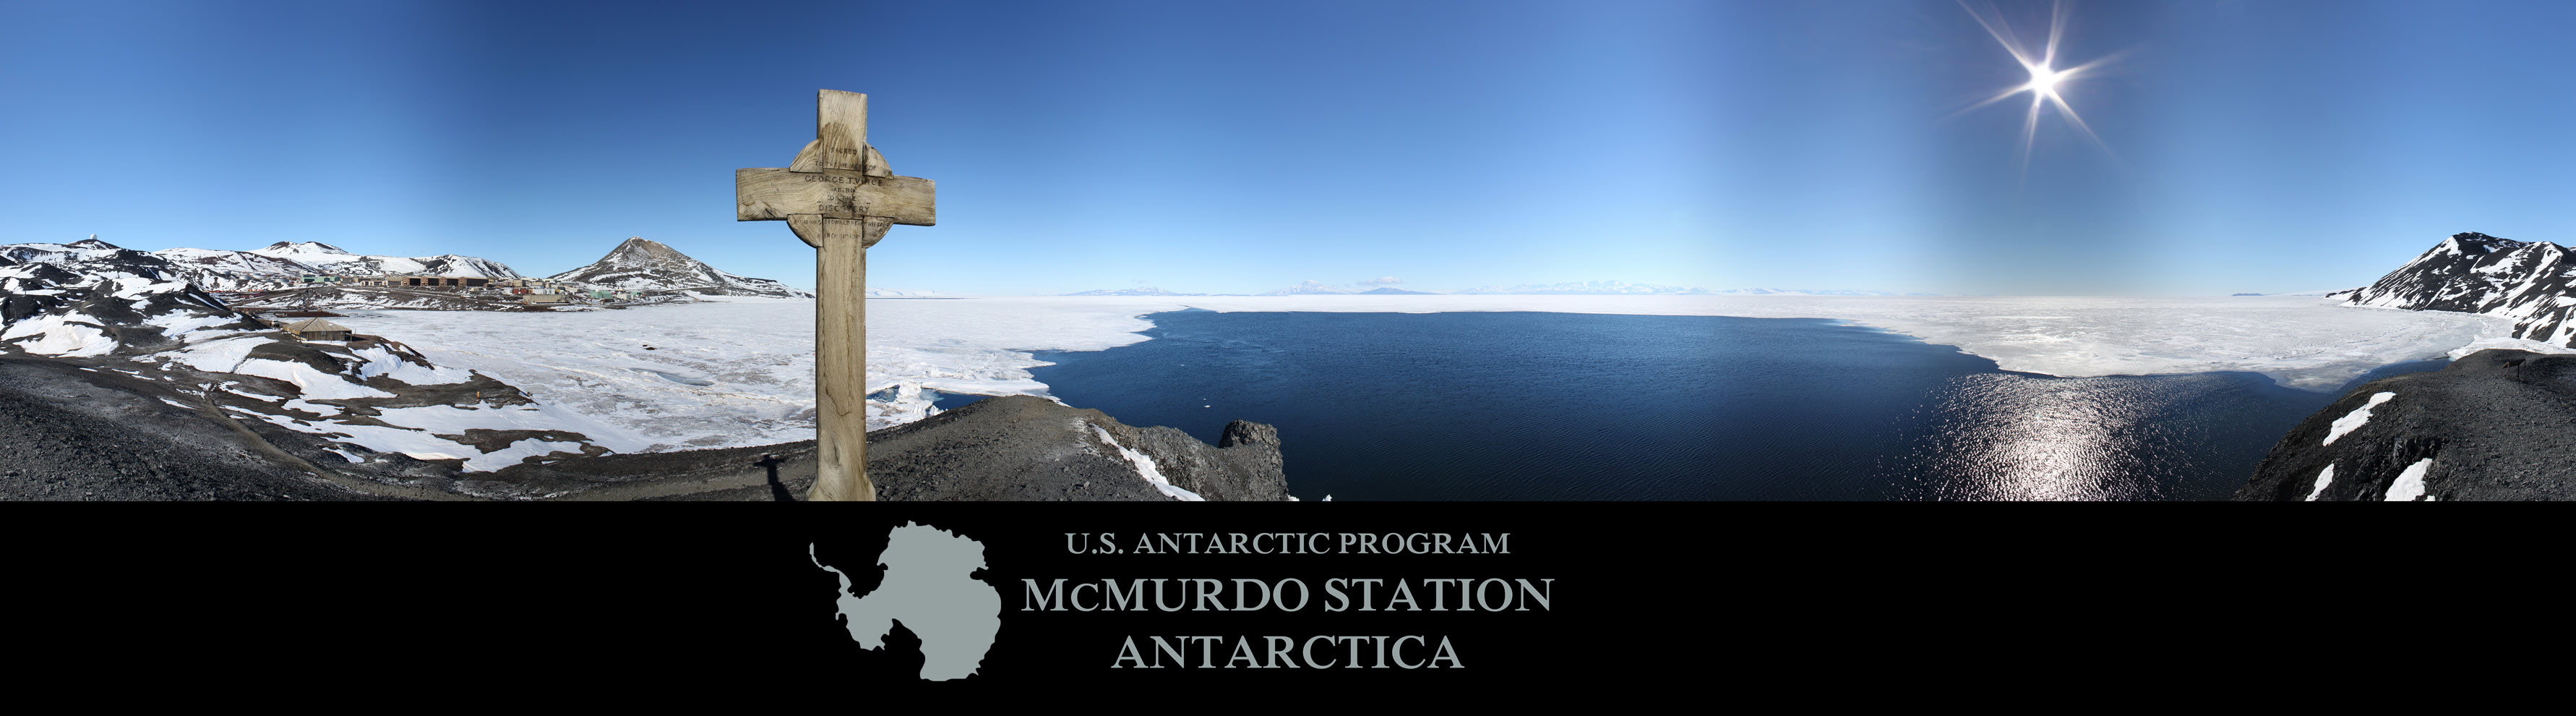 Antarctica 2-12-13 - Copy-0000.jpg